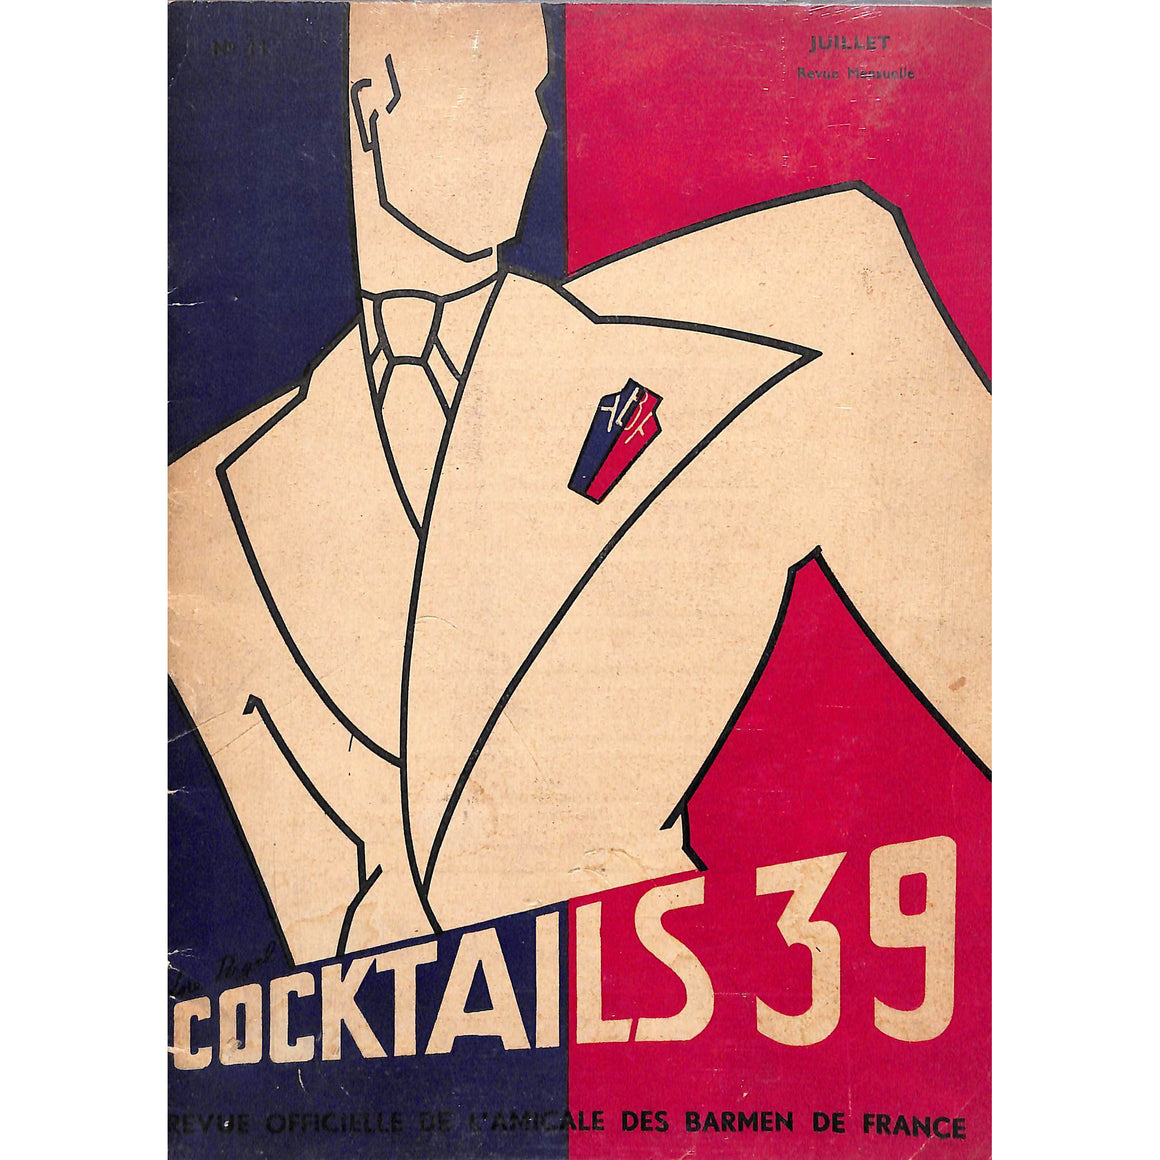 Cocktails 39